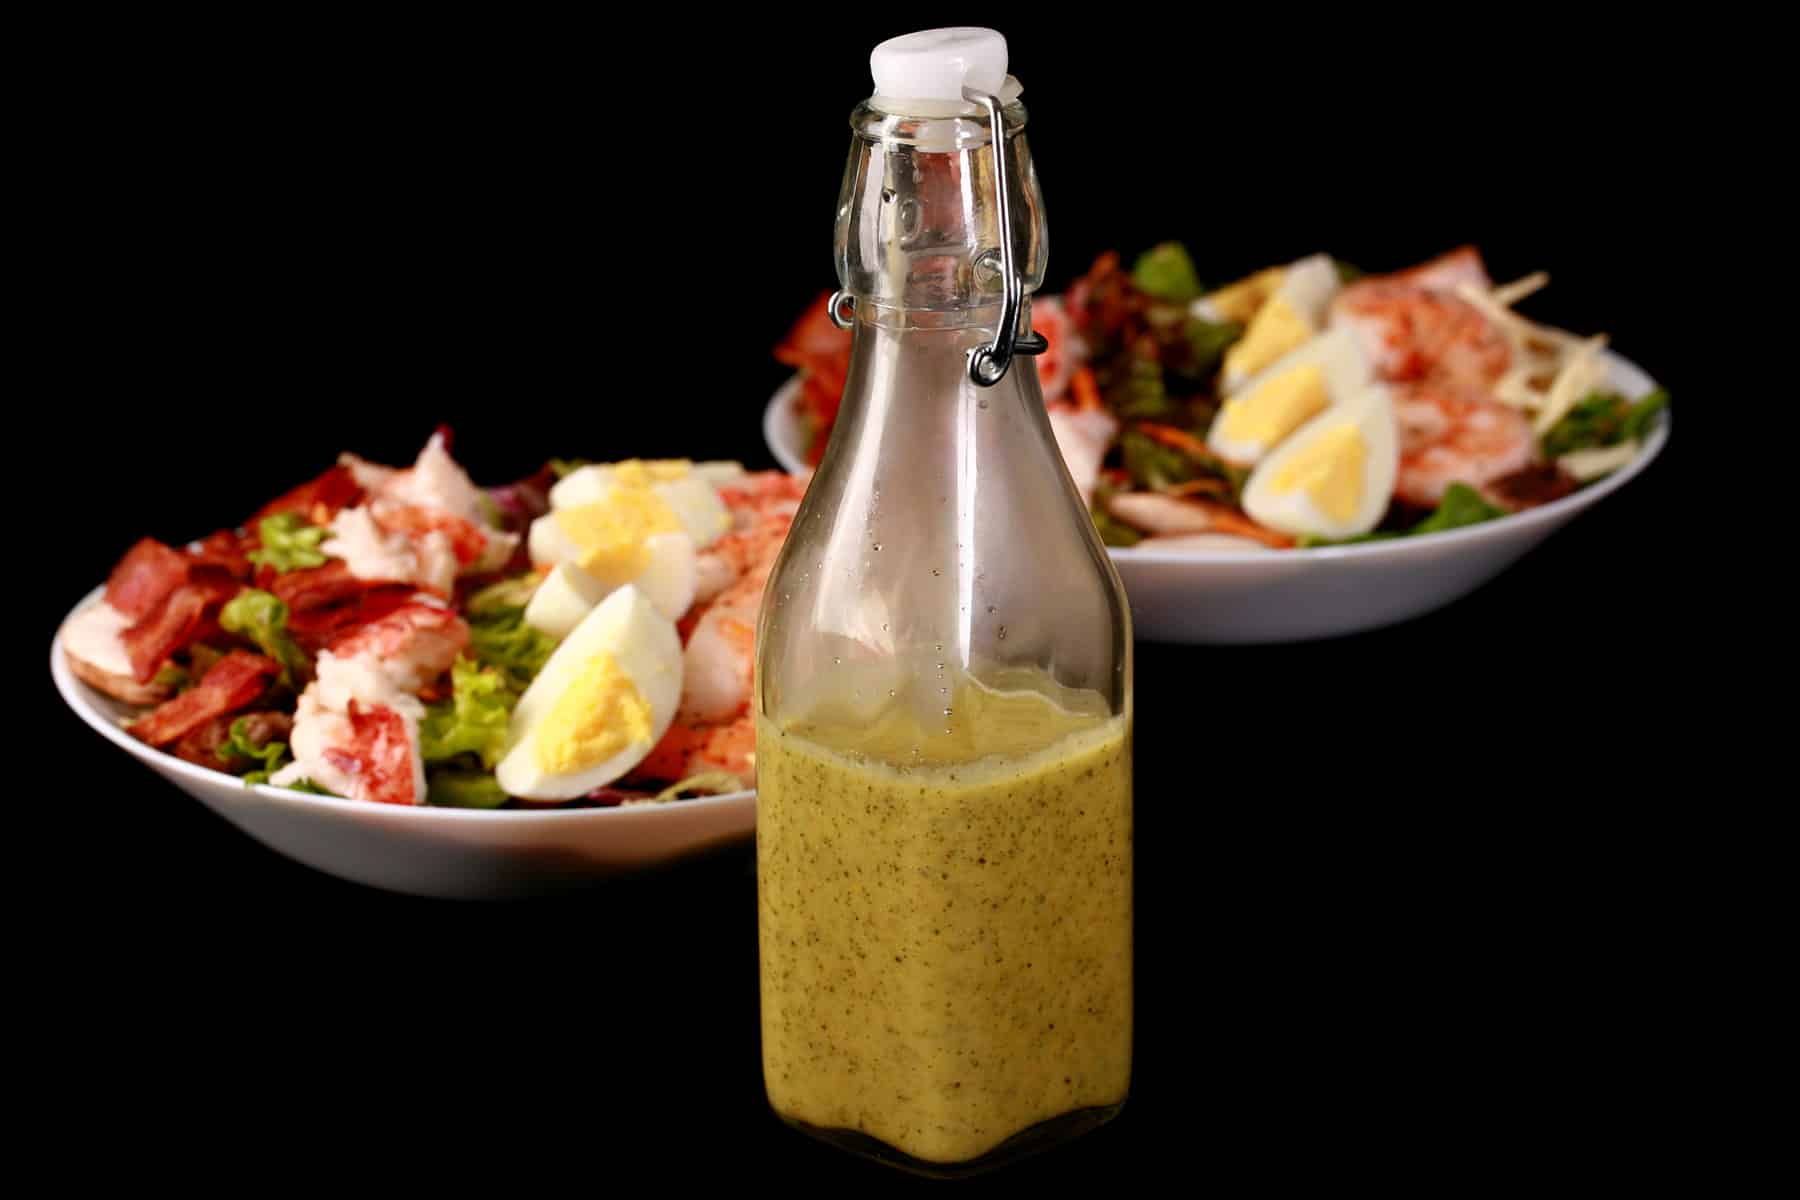 A bottle of lemon dill vinaigette in front of a seafood cobb salad.